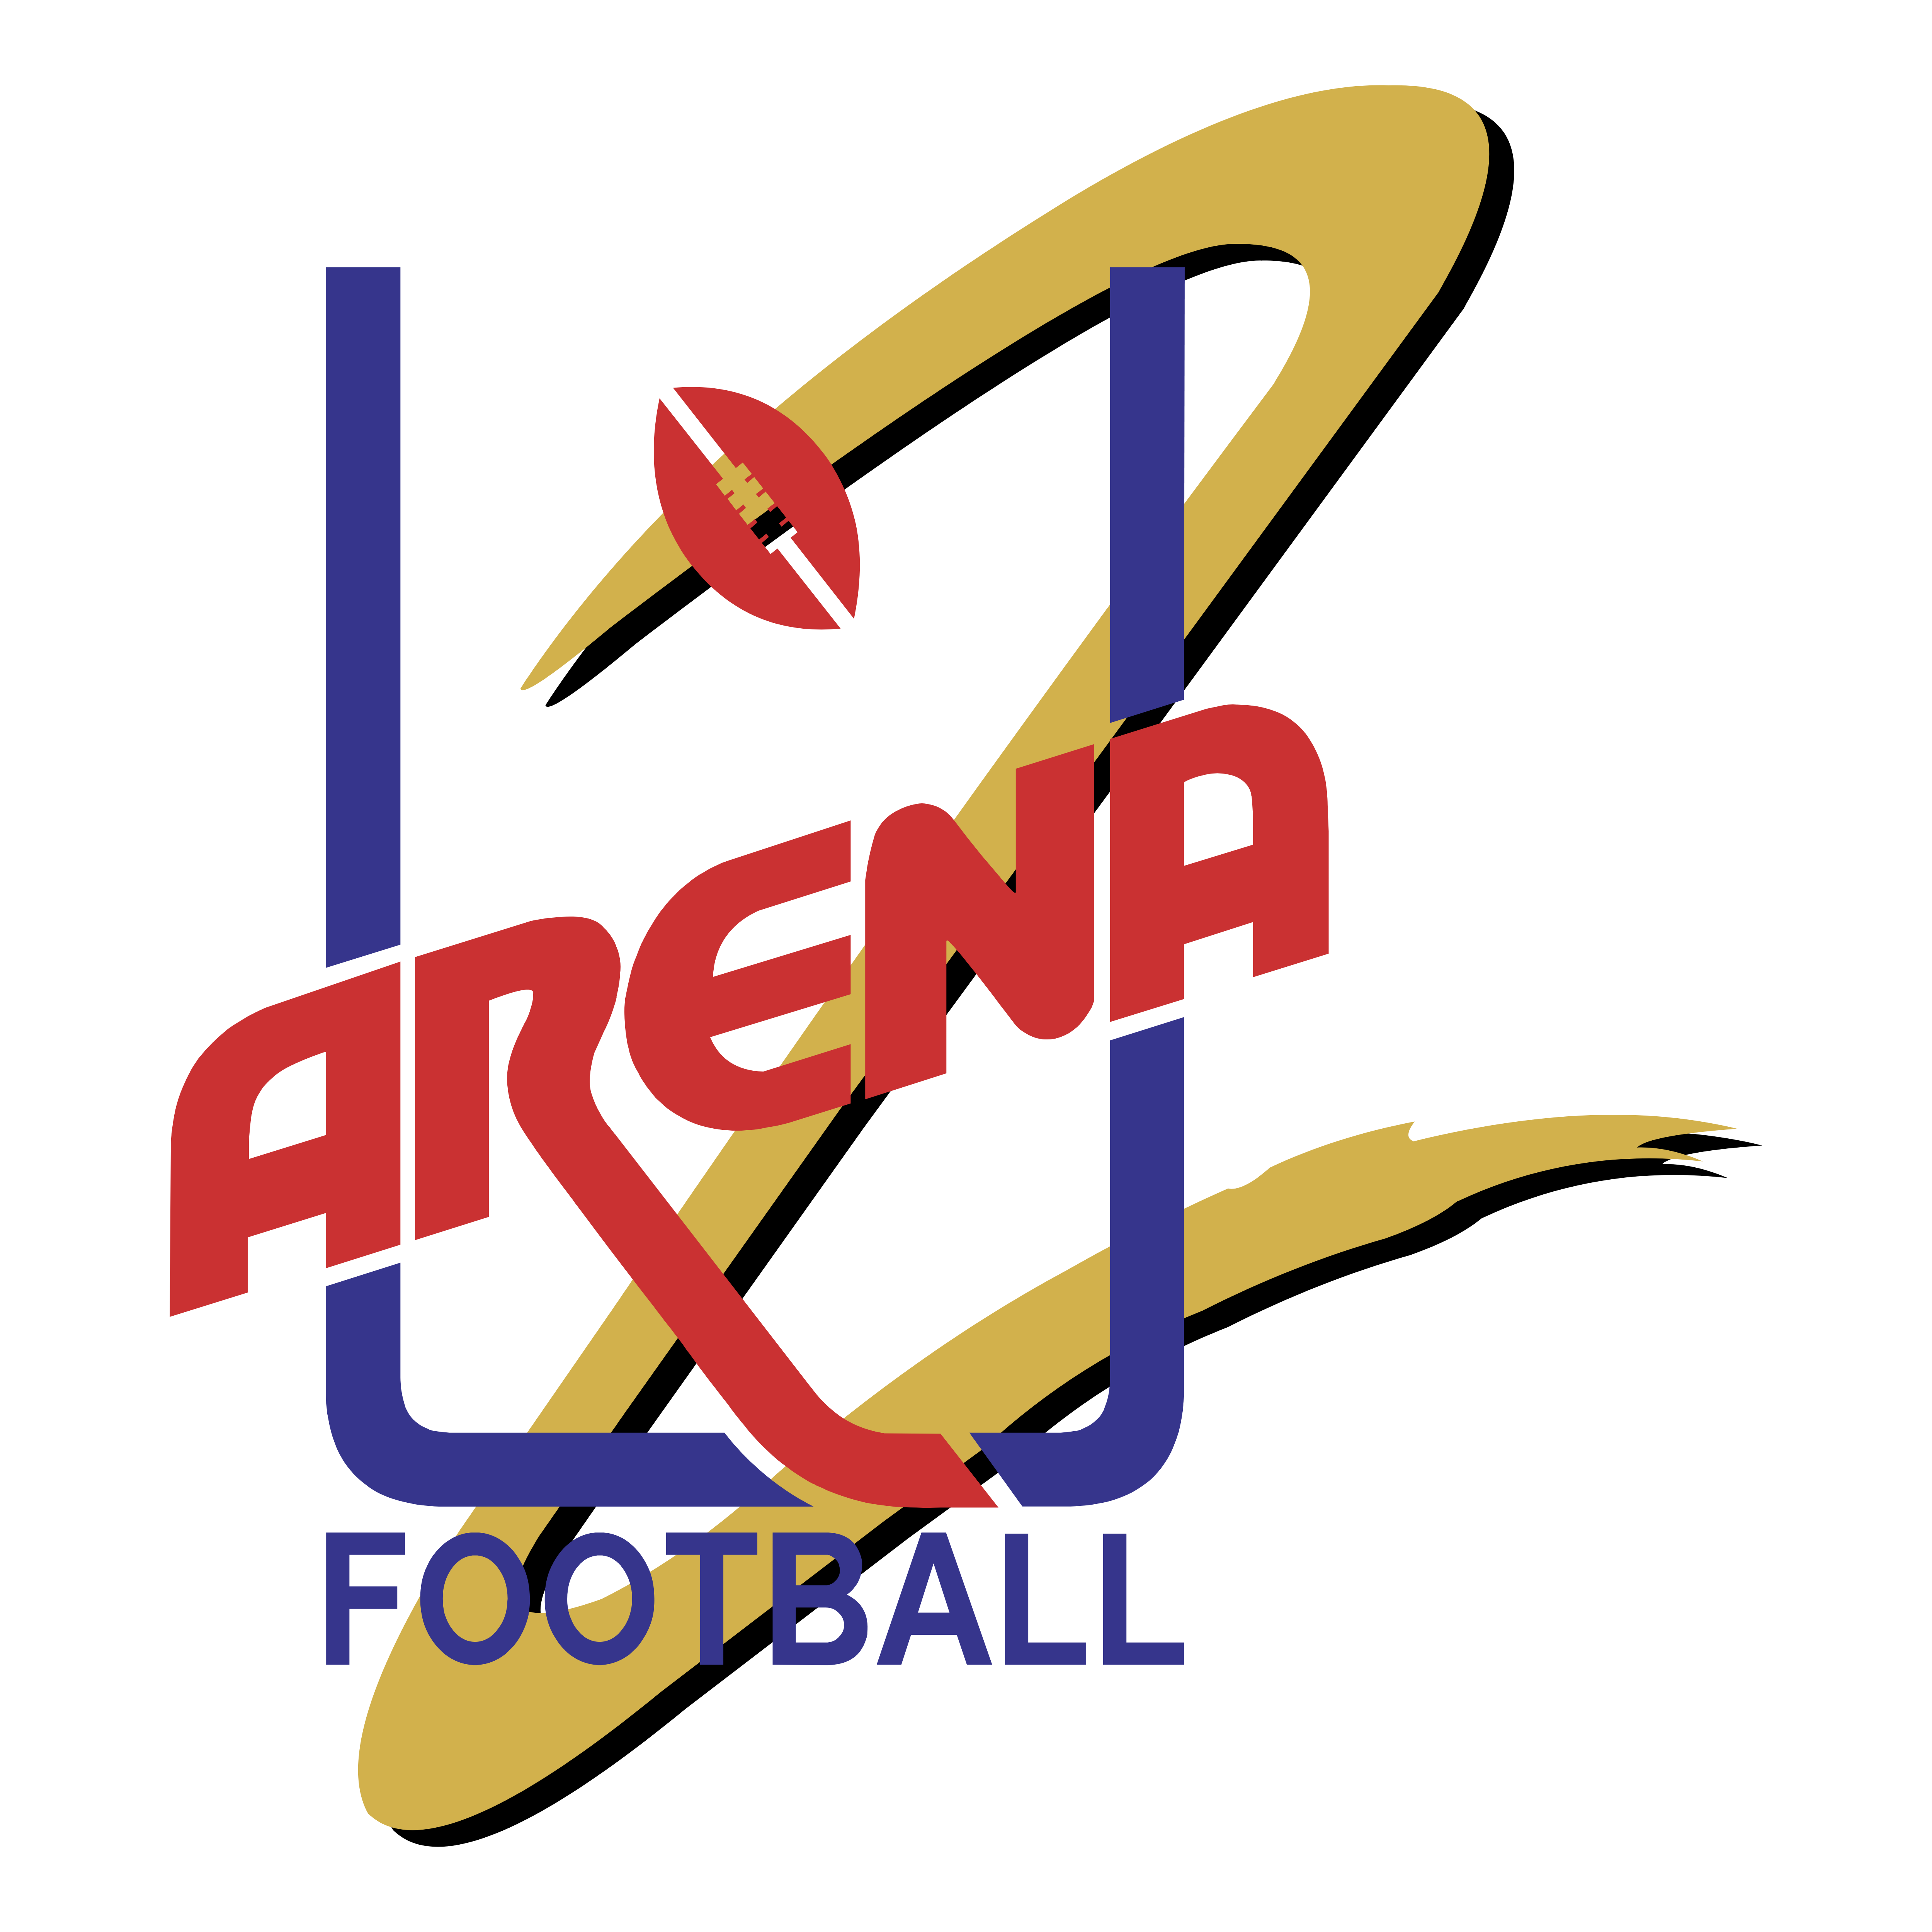 Arena Football League Helmet Logos